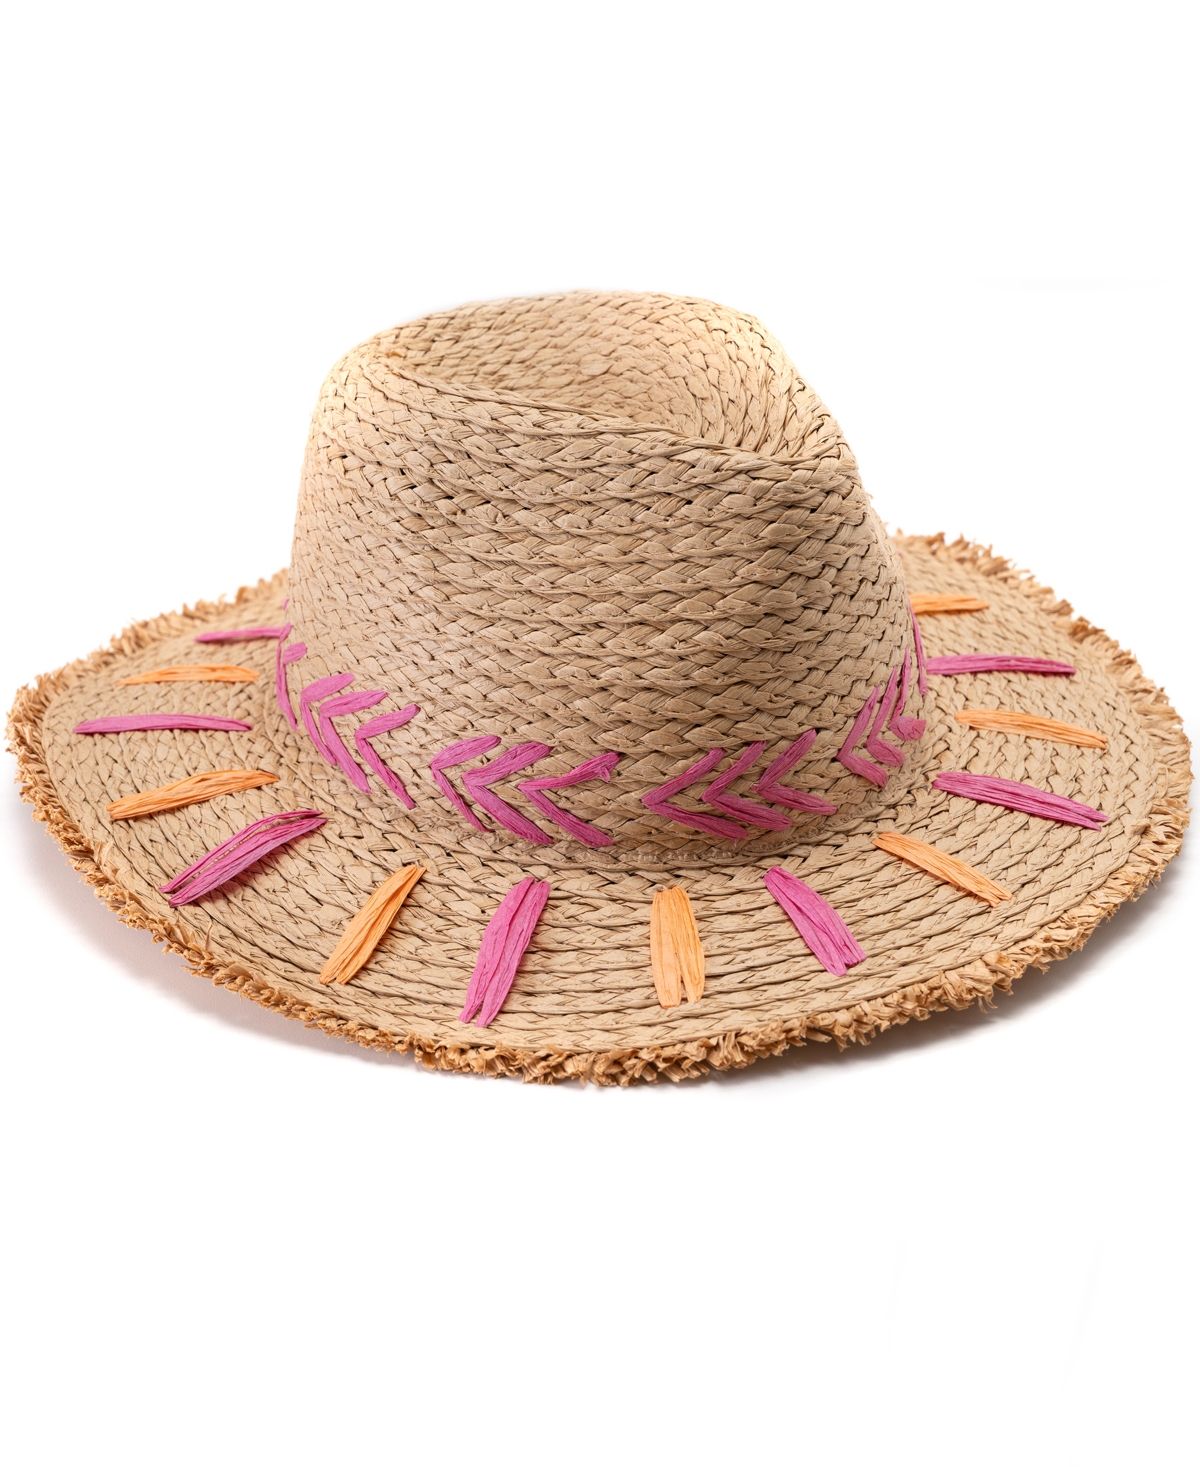 Embroidered Straw Panama Hat - Tan